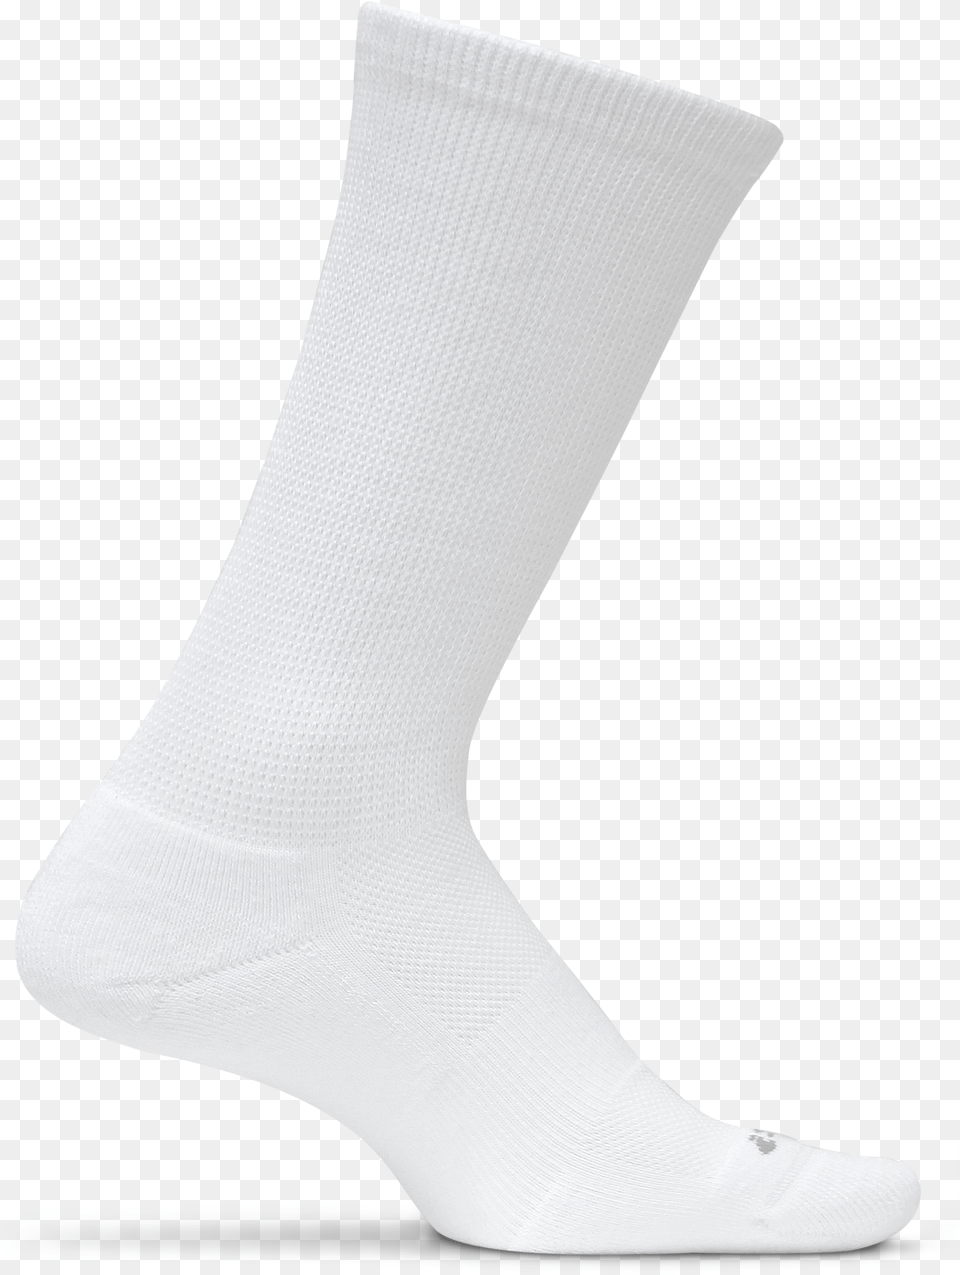 White Socks, Clothing, Hosiery, Sock Png